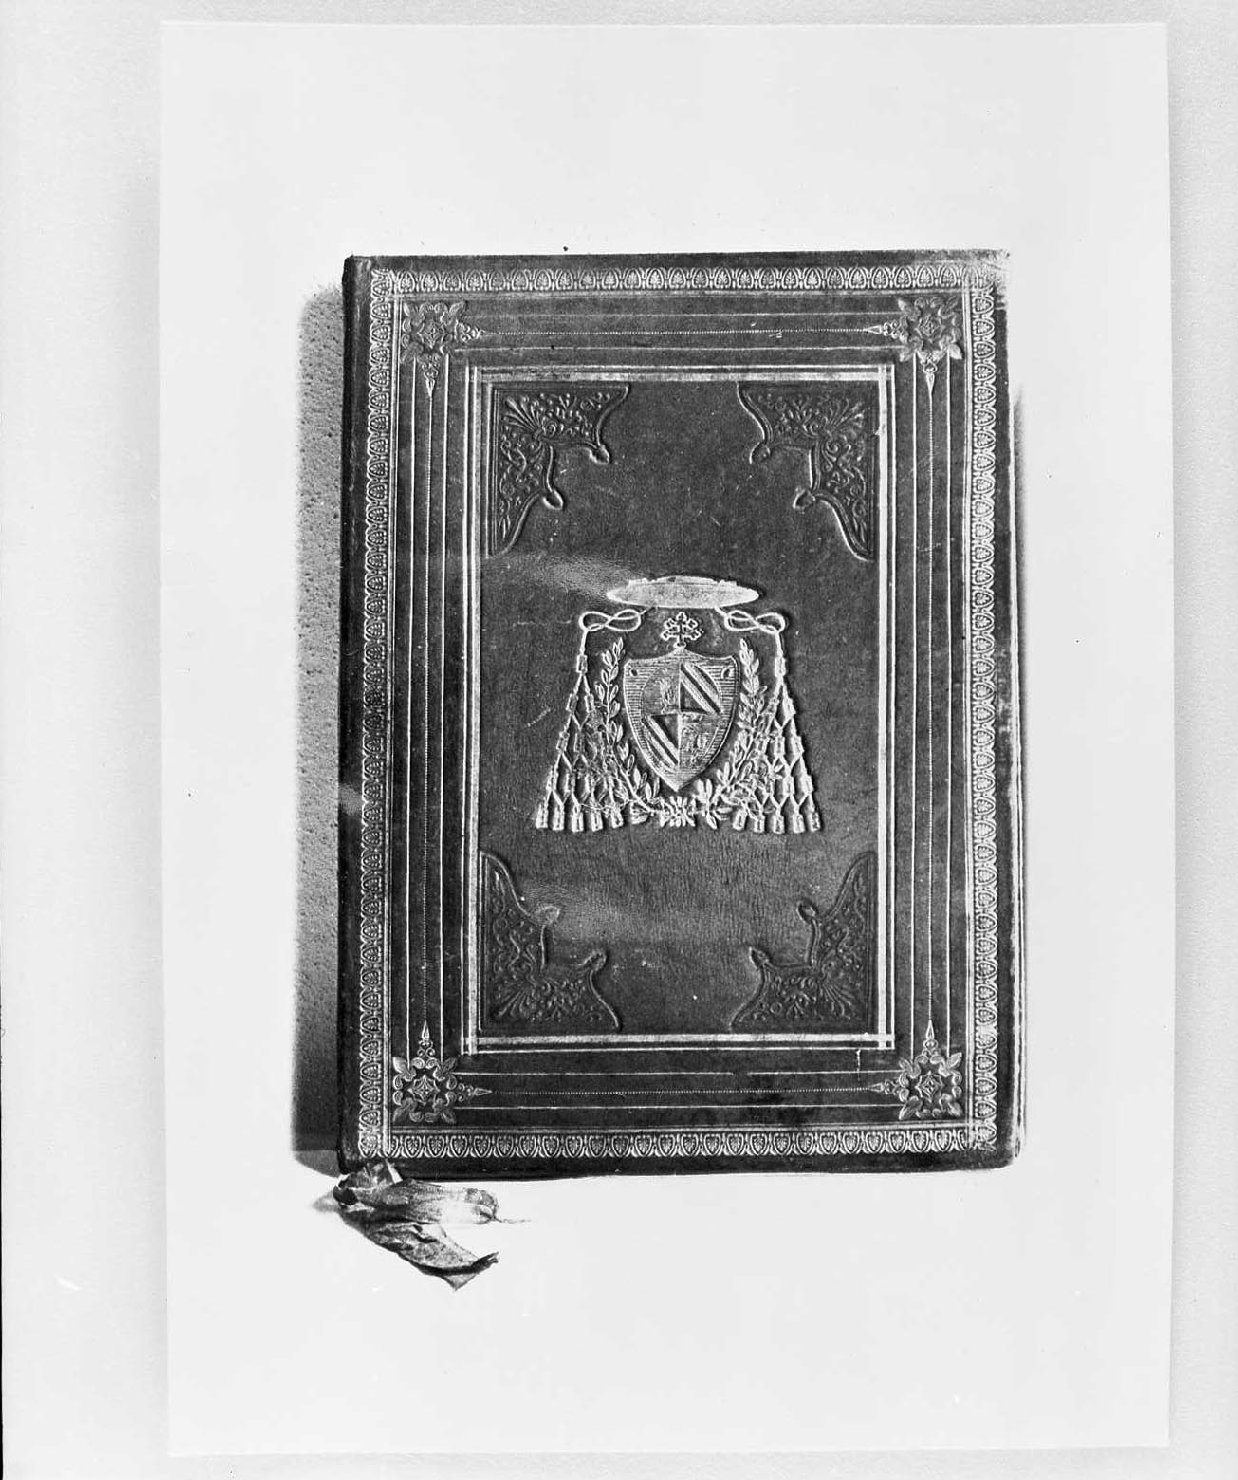 coperta di libro liturgico - bottega romagnola (sec. XIX)